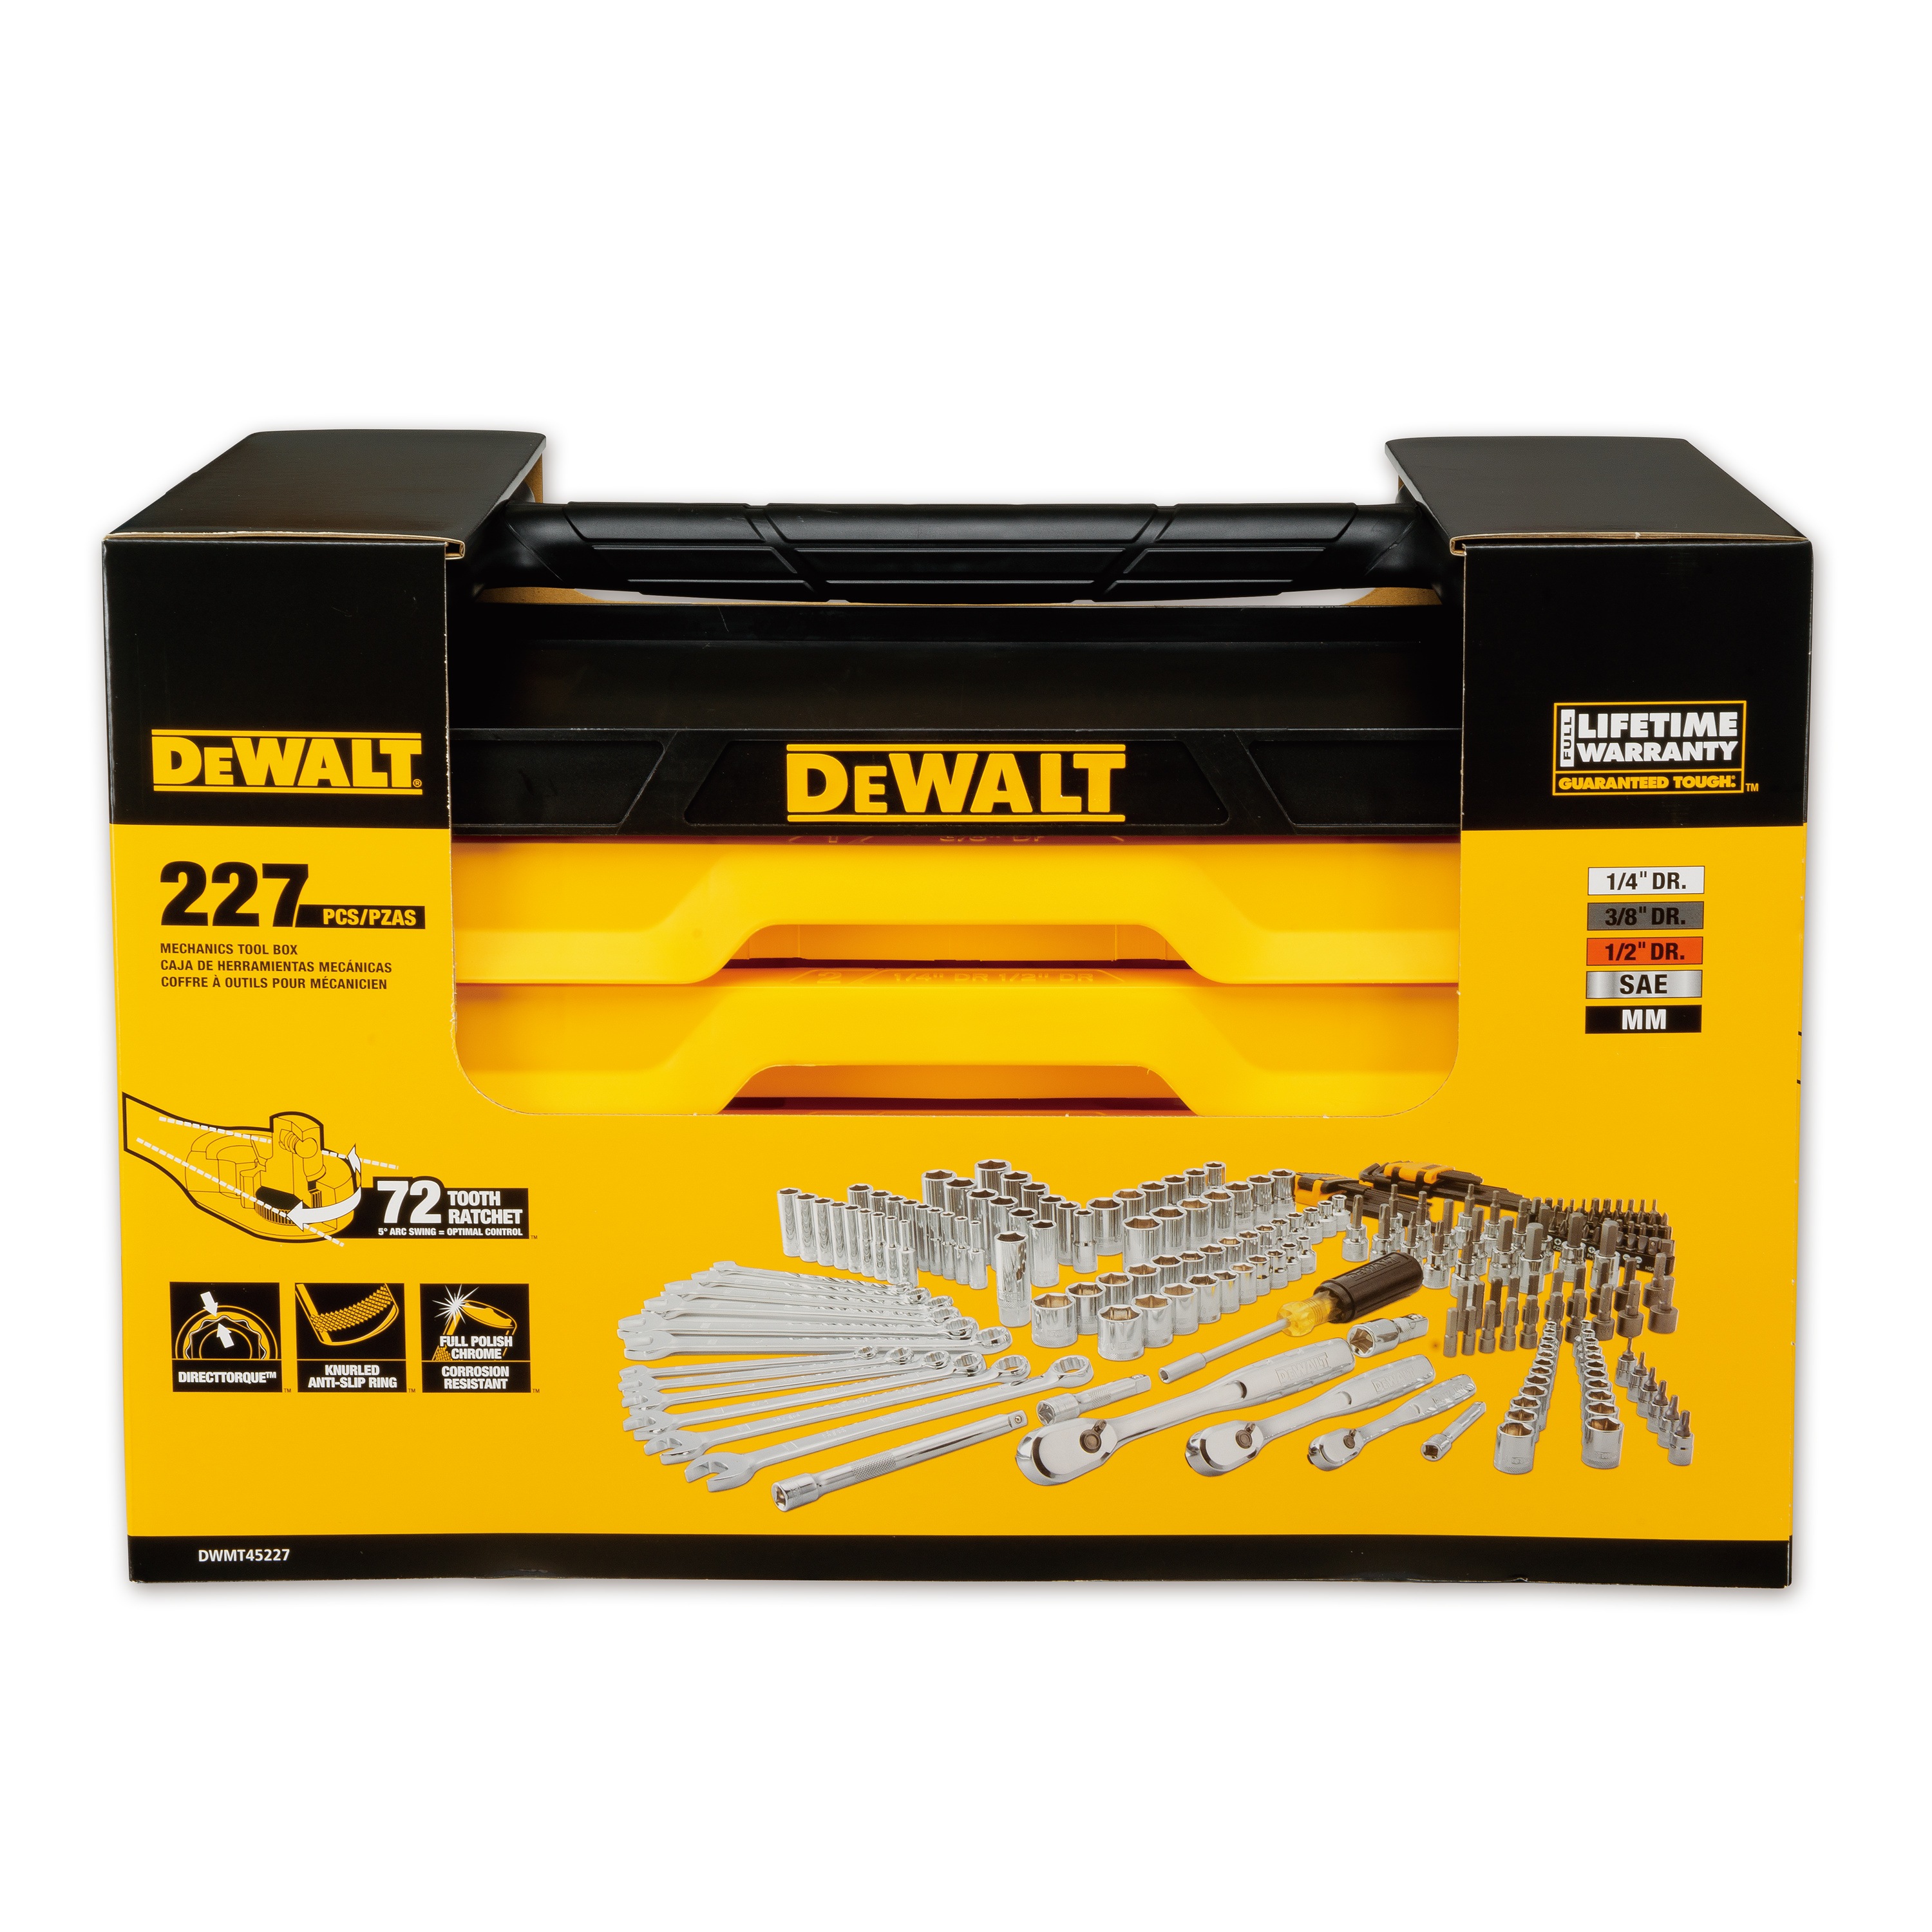 3 drawer box for 227 piece DEWALT mechanics tools set packed.